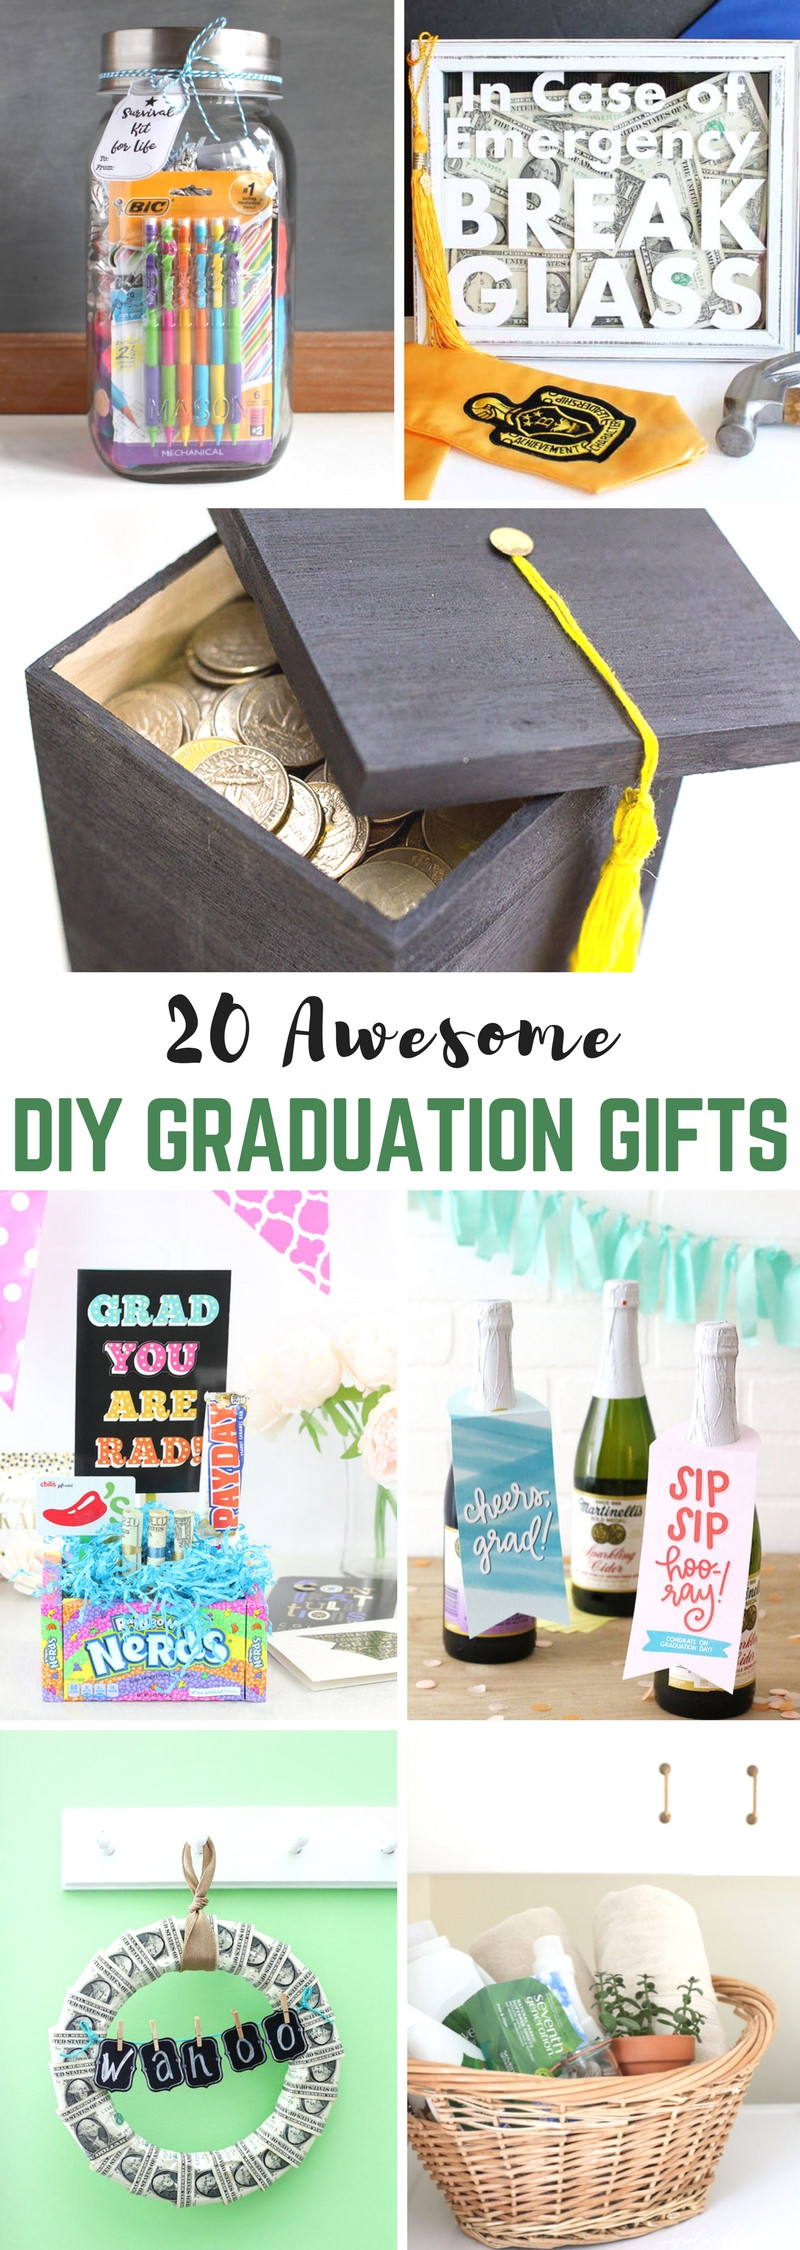 DIY Graduation Gifts
 20 Awesome DIY Graduation Gifts